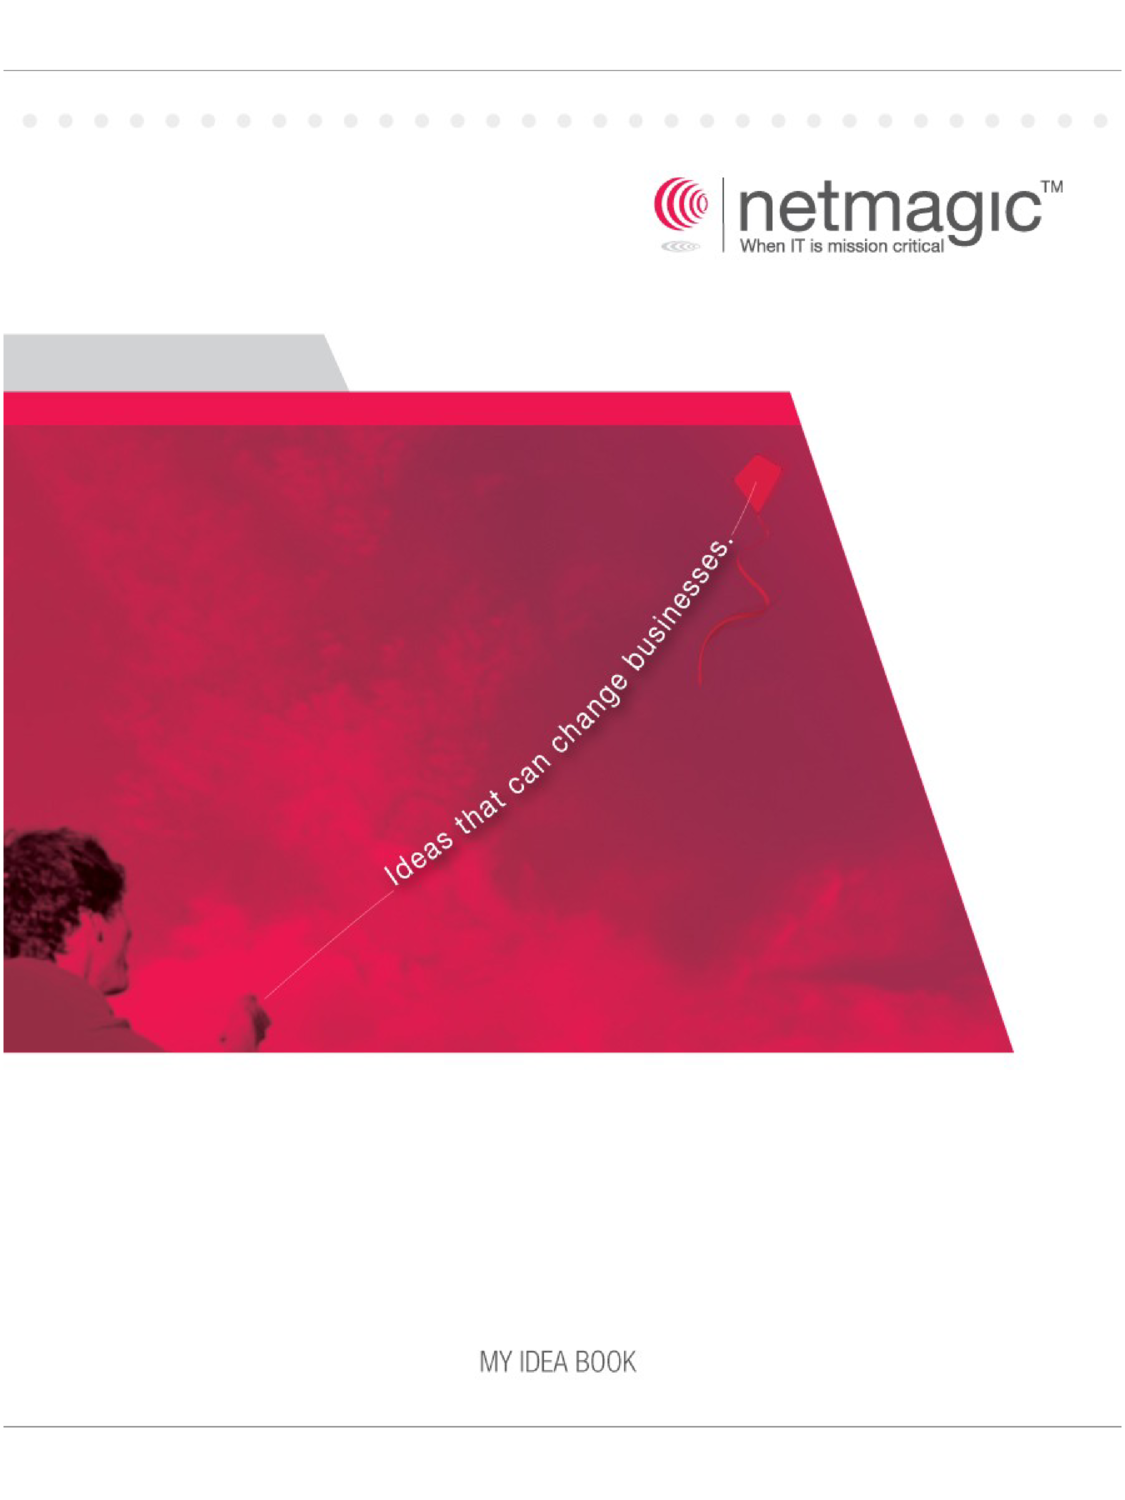 Netmagic Direct Mailer